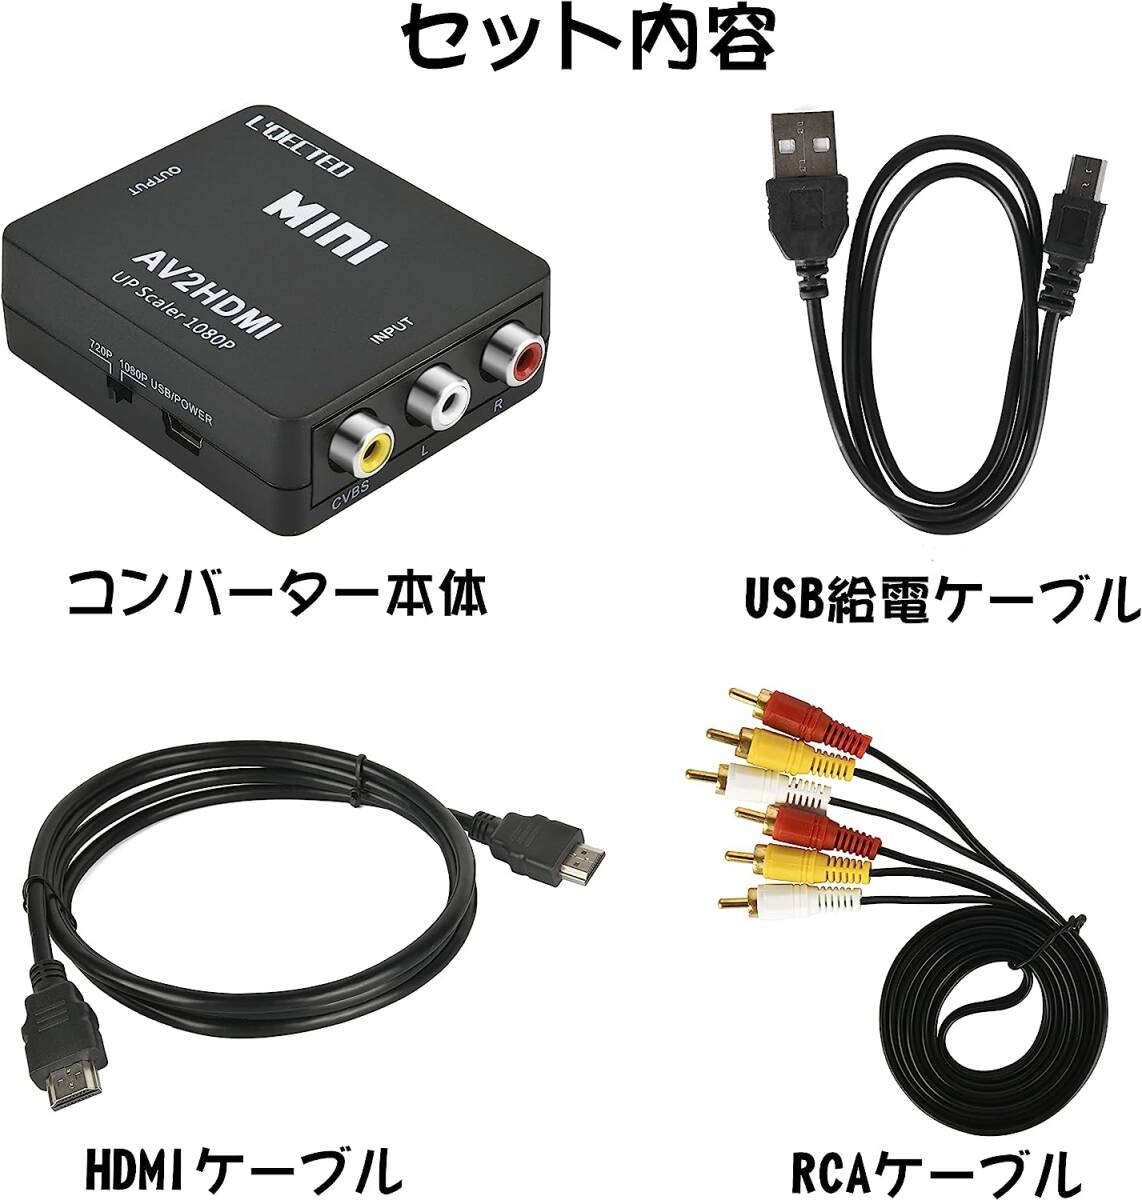 RCA to HDMI変換コンバーター L'QECTED RCA HDMI 変換 AV2HDMI 1080/720P切り替え 音声_画像2